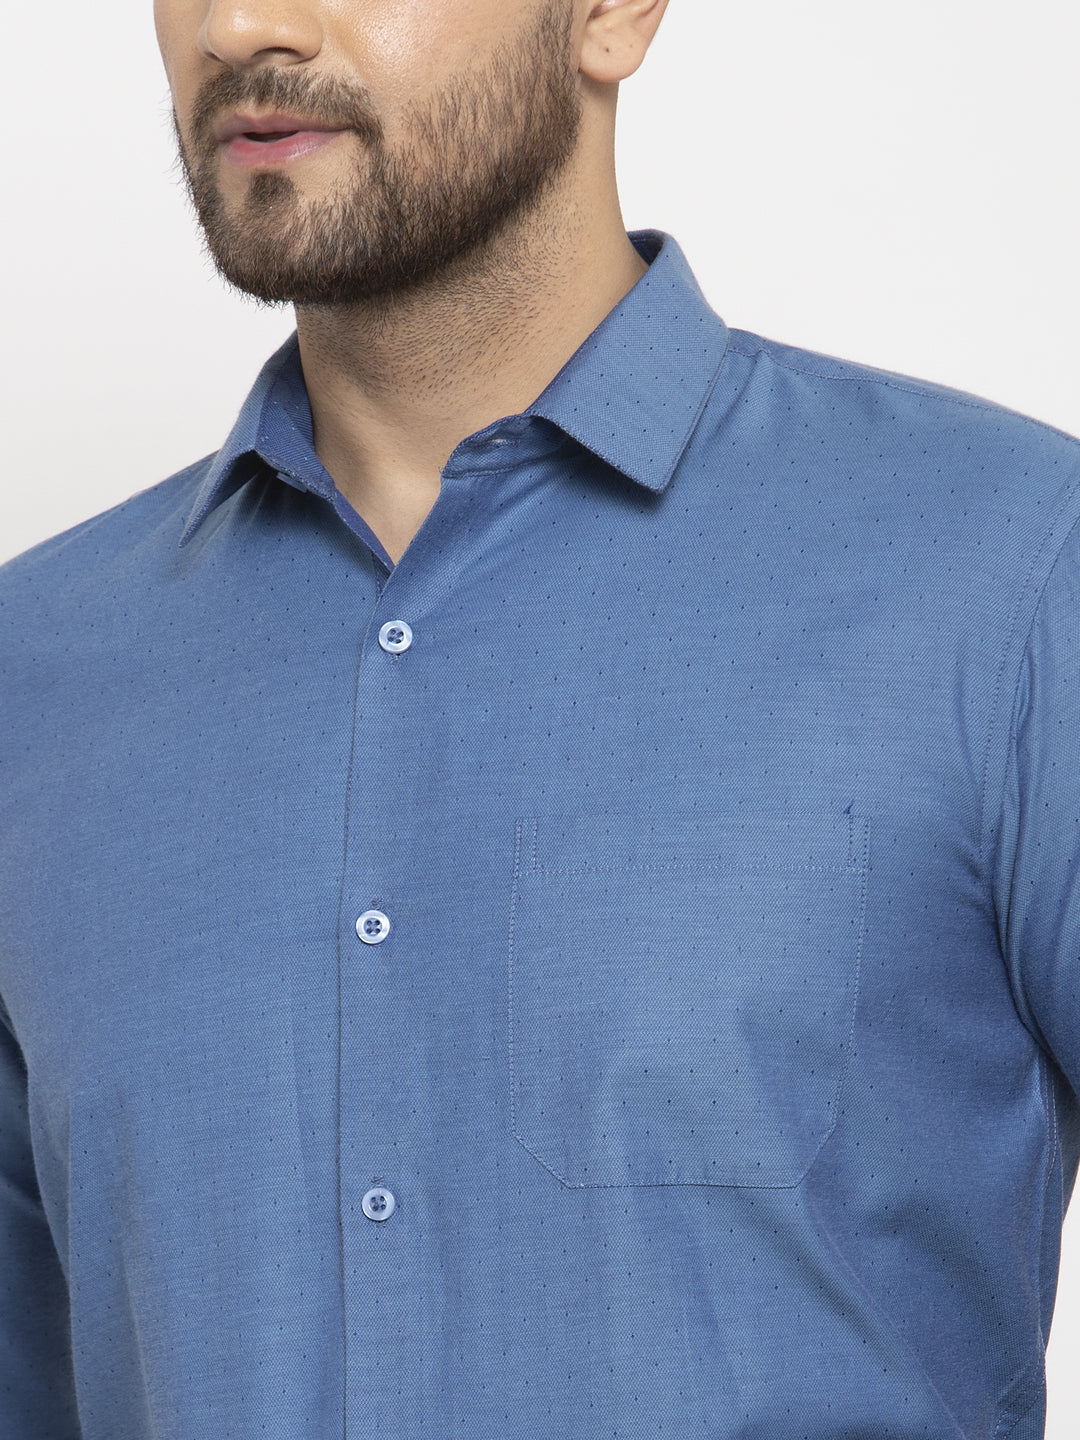 Jainish Teal Men's Cotton Polka Dots Formal Shirt's